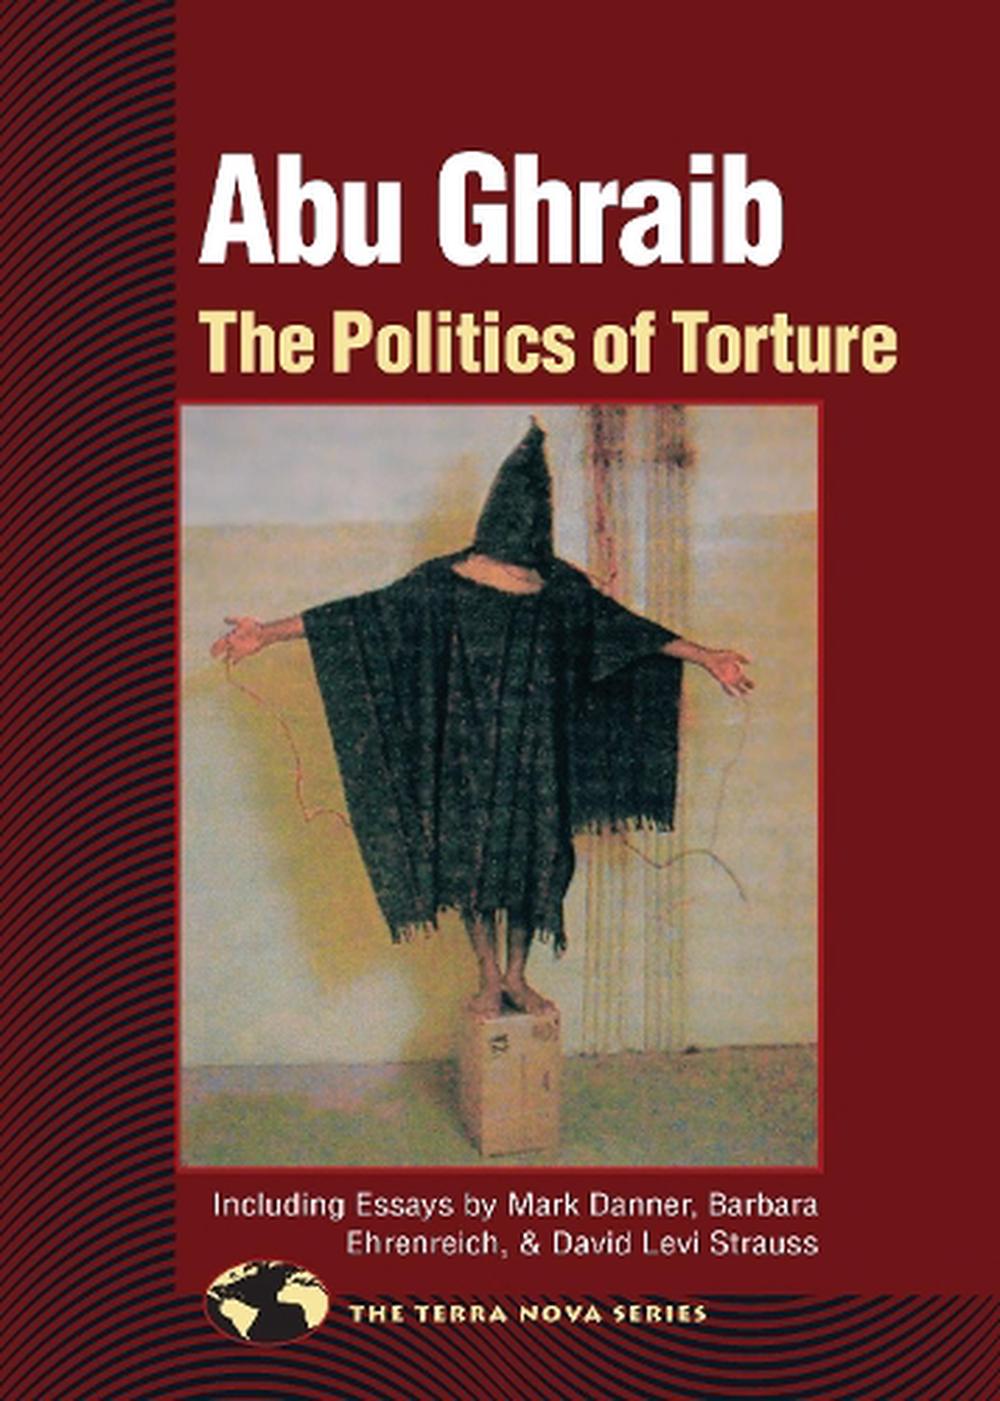 Chronology of Abu Ghraib (washingtonpost.com)